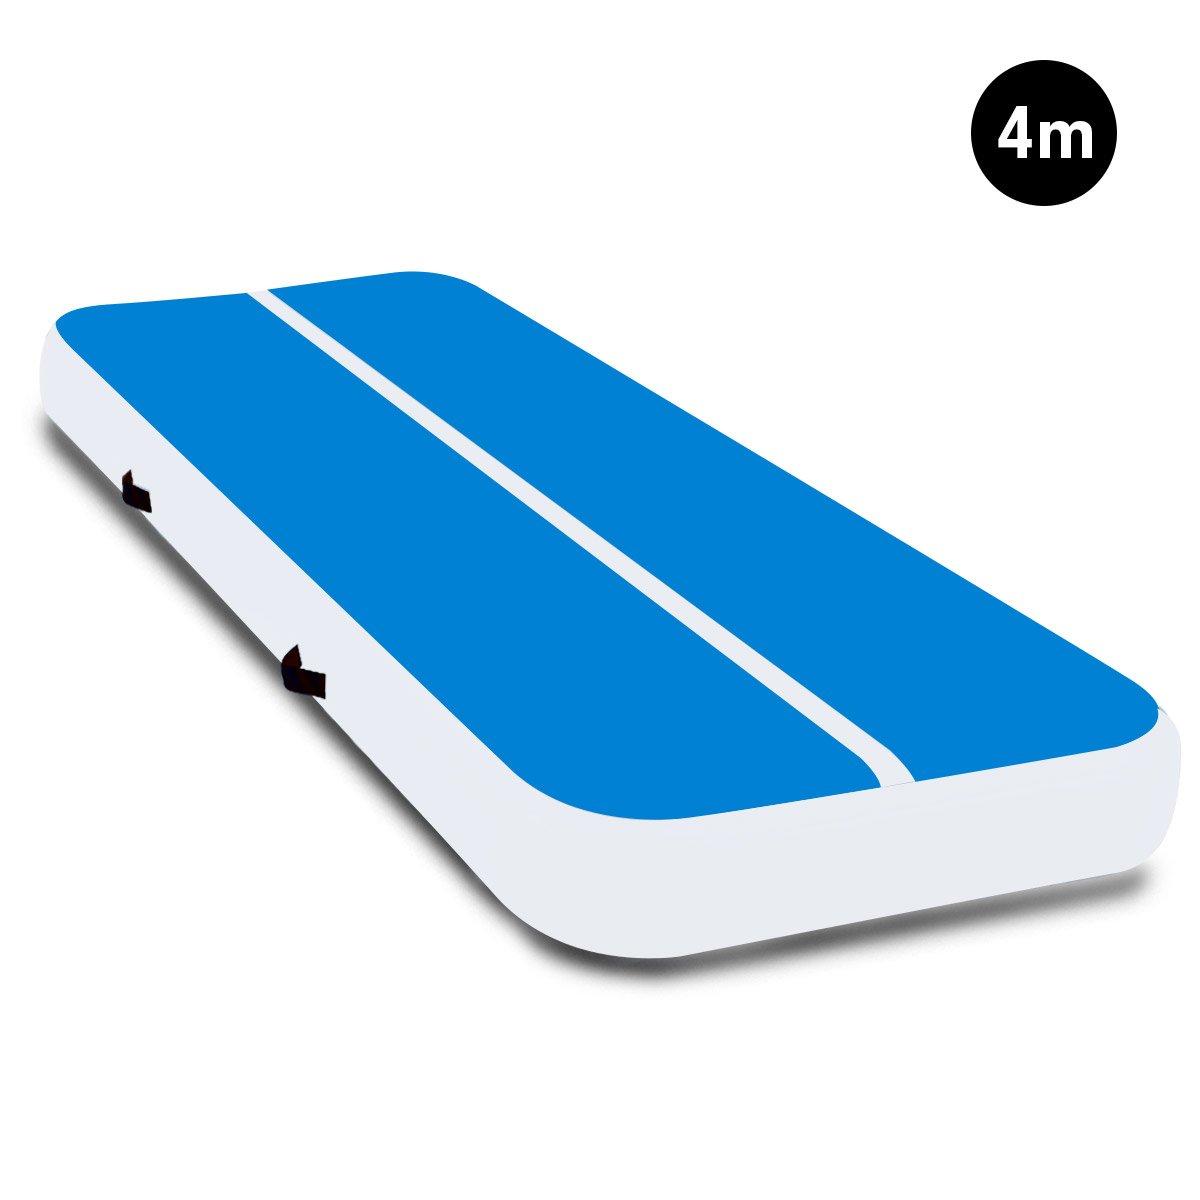 4m x 2m Air Track Gymnastics Mat Tumbling Exercise - Blue White 1